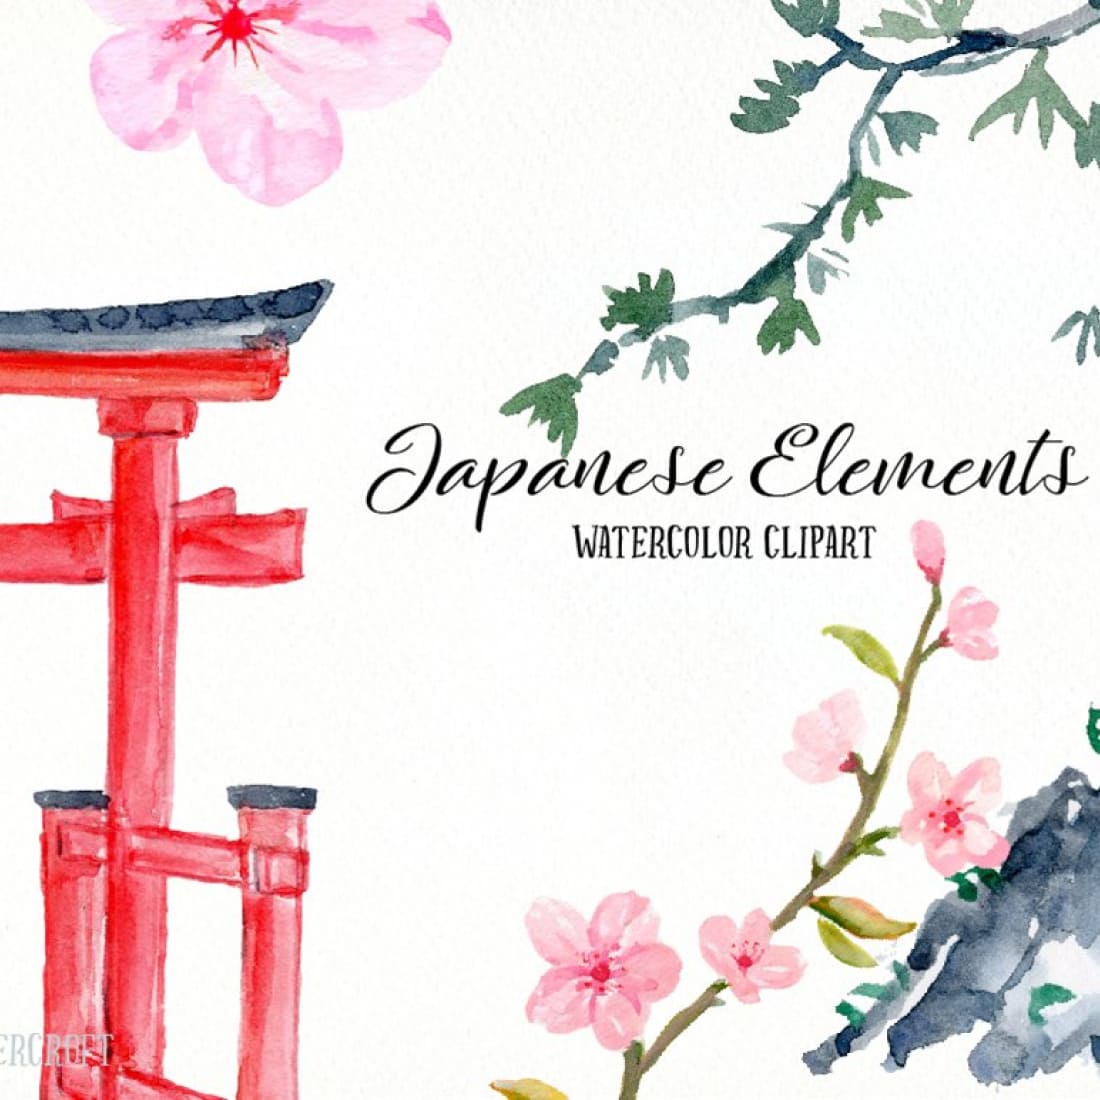 Japanese Elements Clip Art cover.